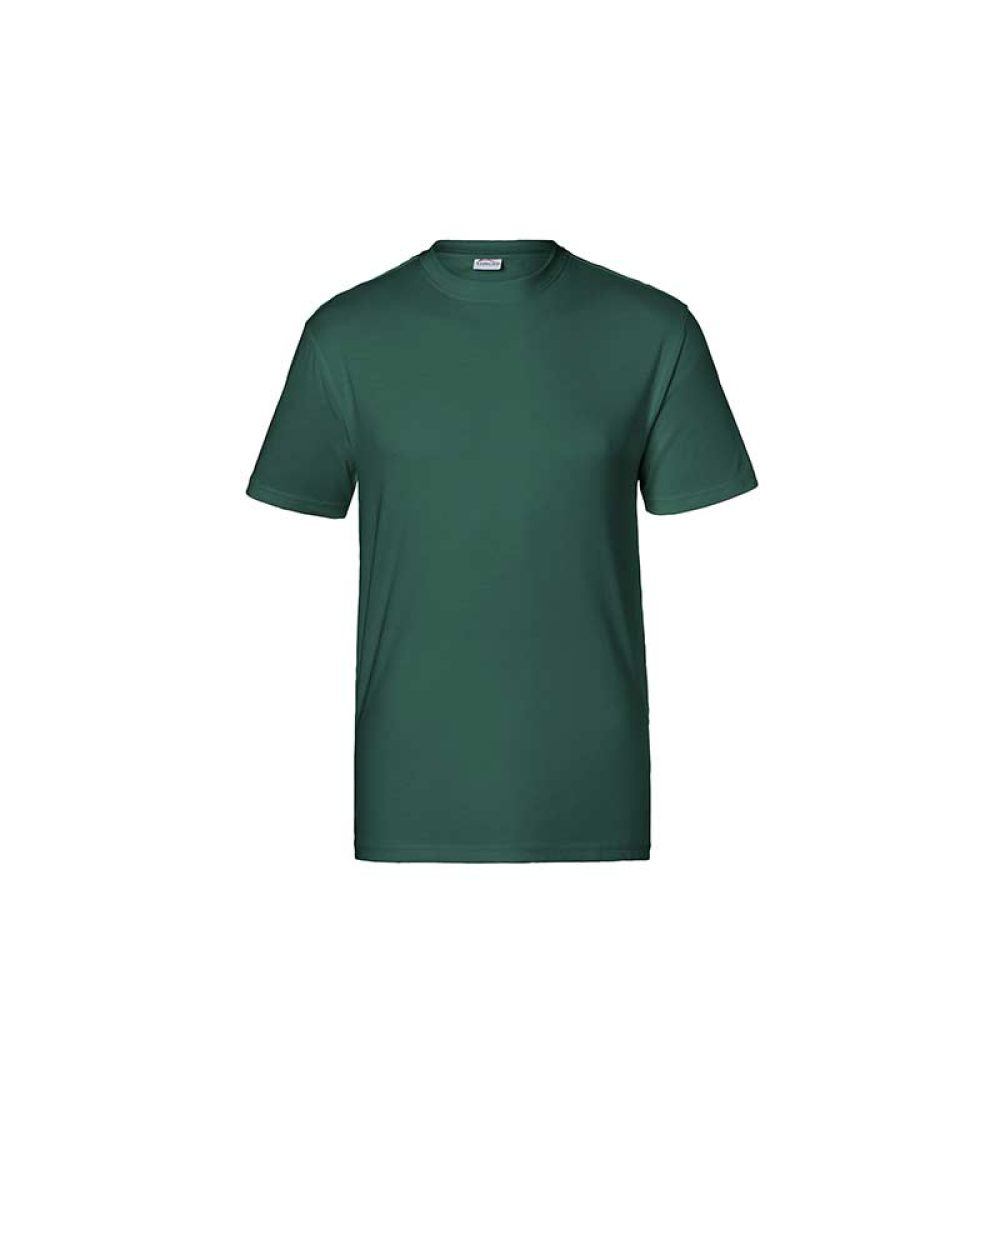 kuebler-t-shirt-shirts-5124-6538-65